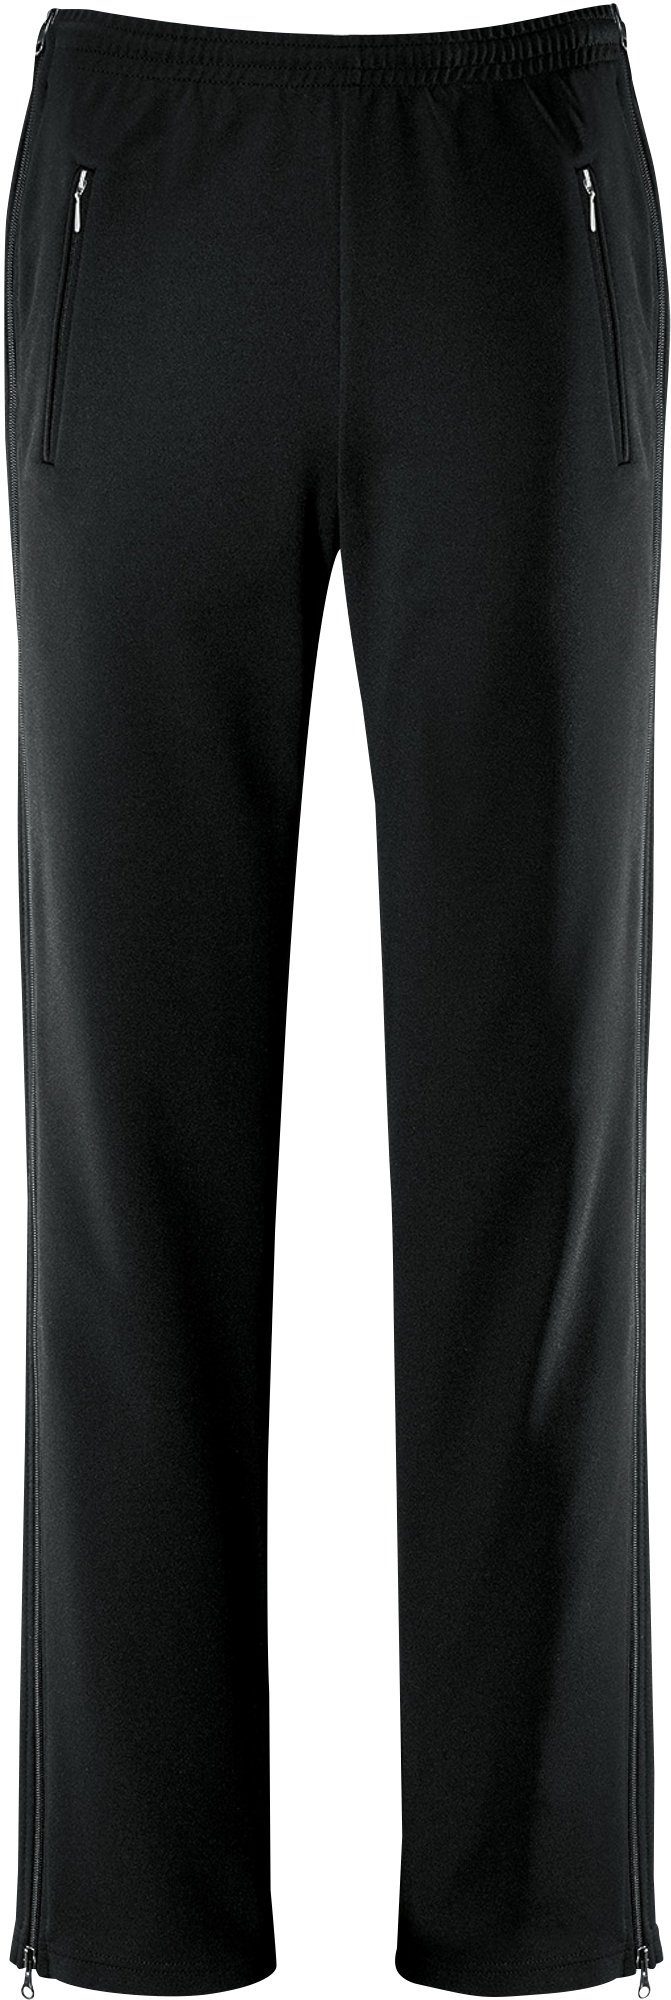 SCHNEIDER Sportswear Jogginghose Damen-Freizeithose "GÖTEBORGW", lang Uni 999 schwarz